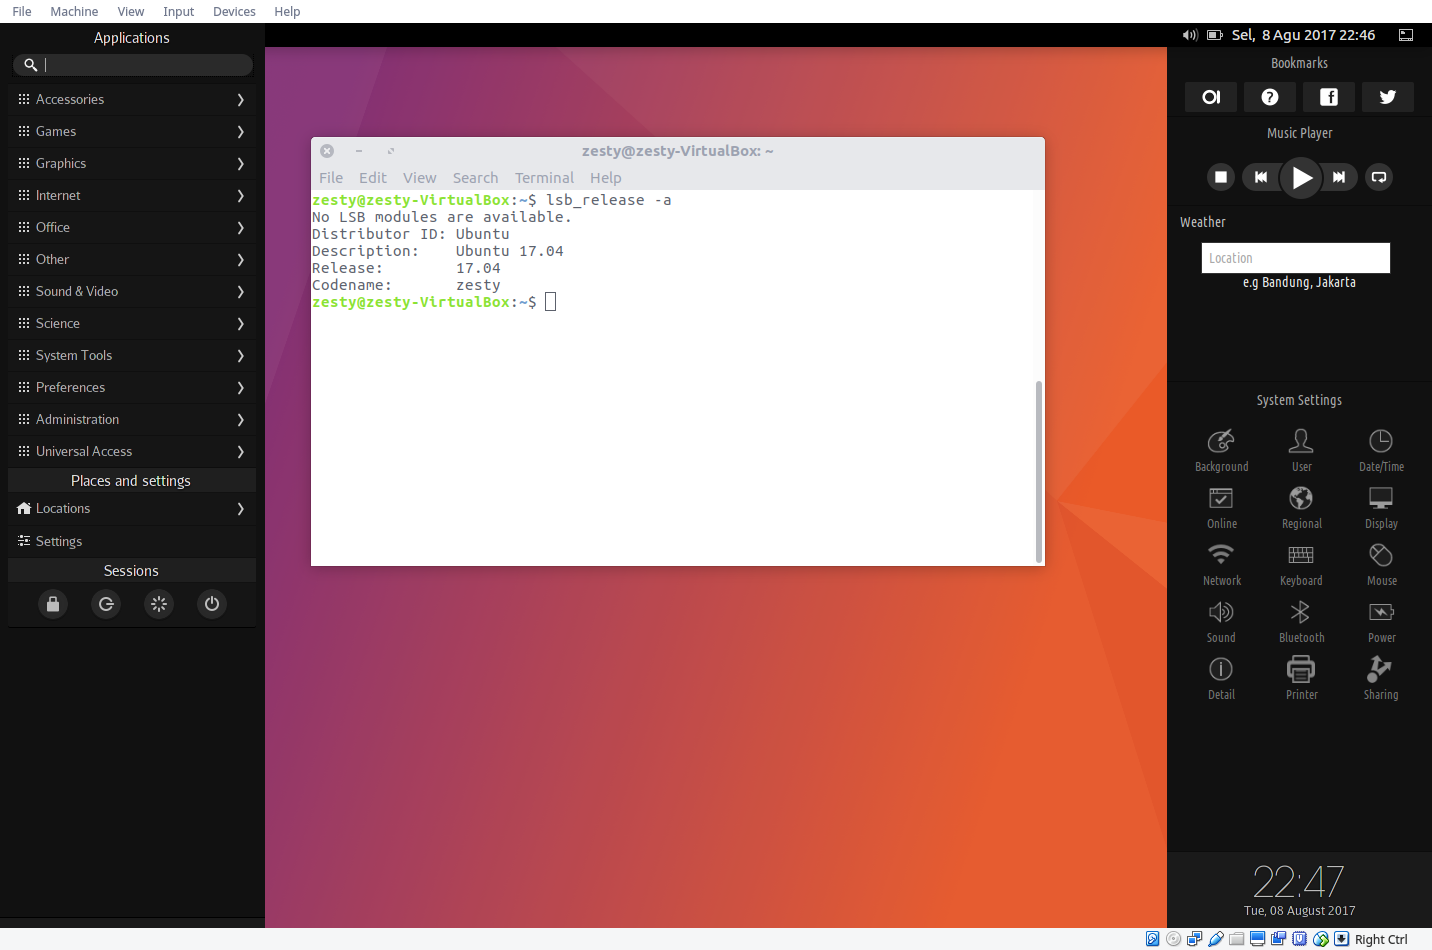 How to Install Manokwari Shell on Ubuntu 16.04/17.04